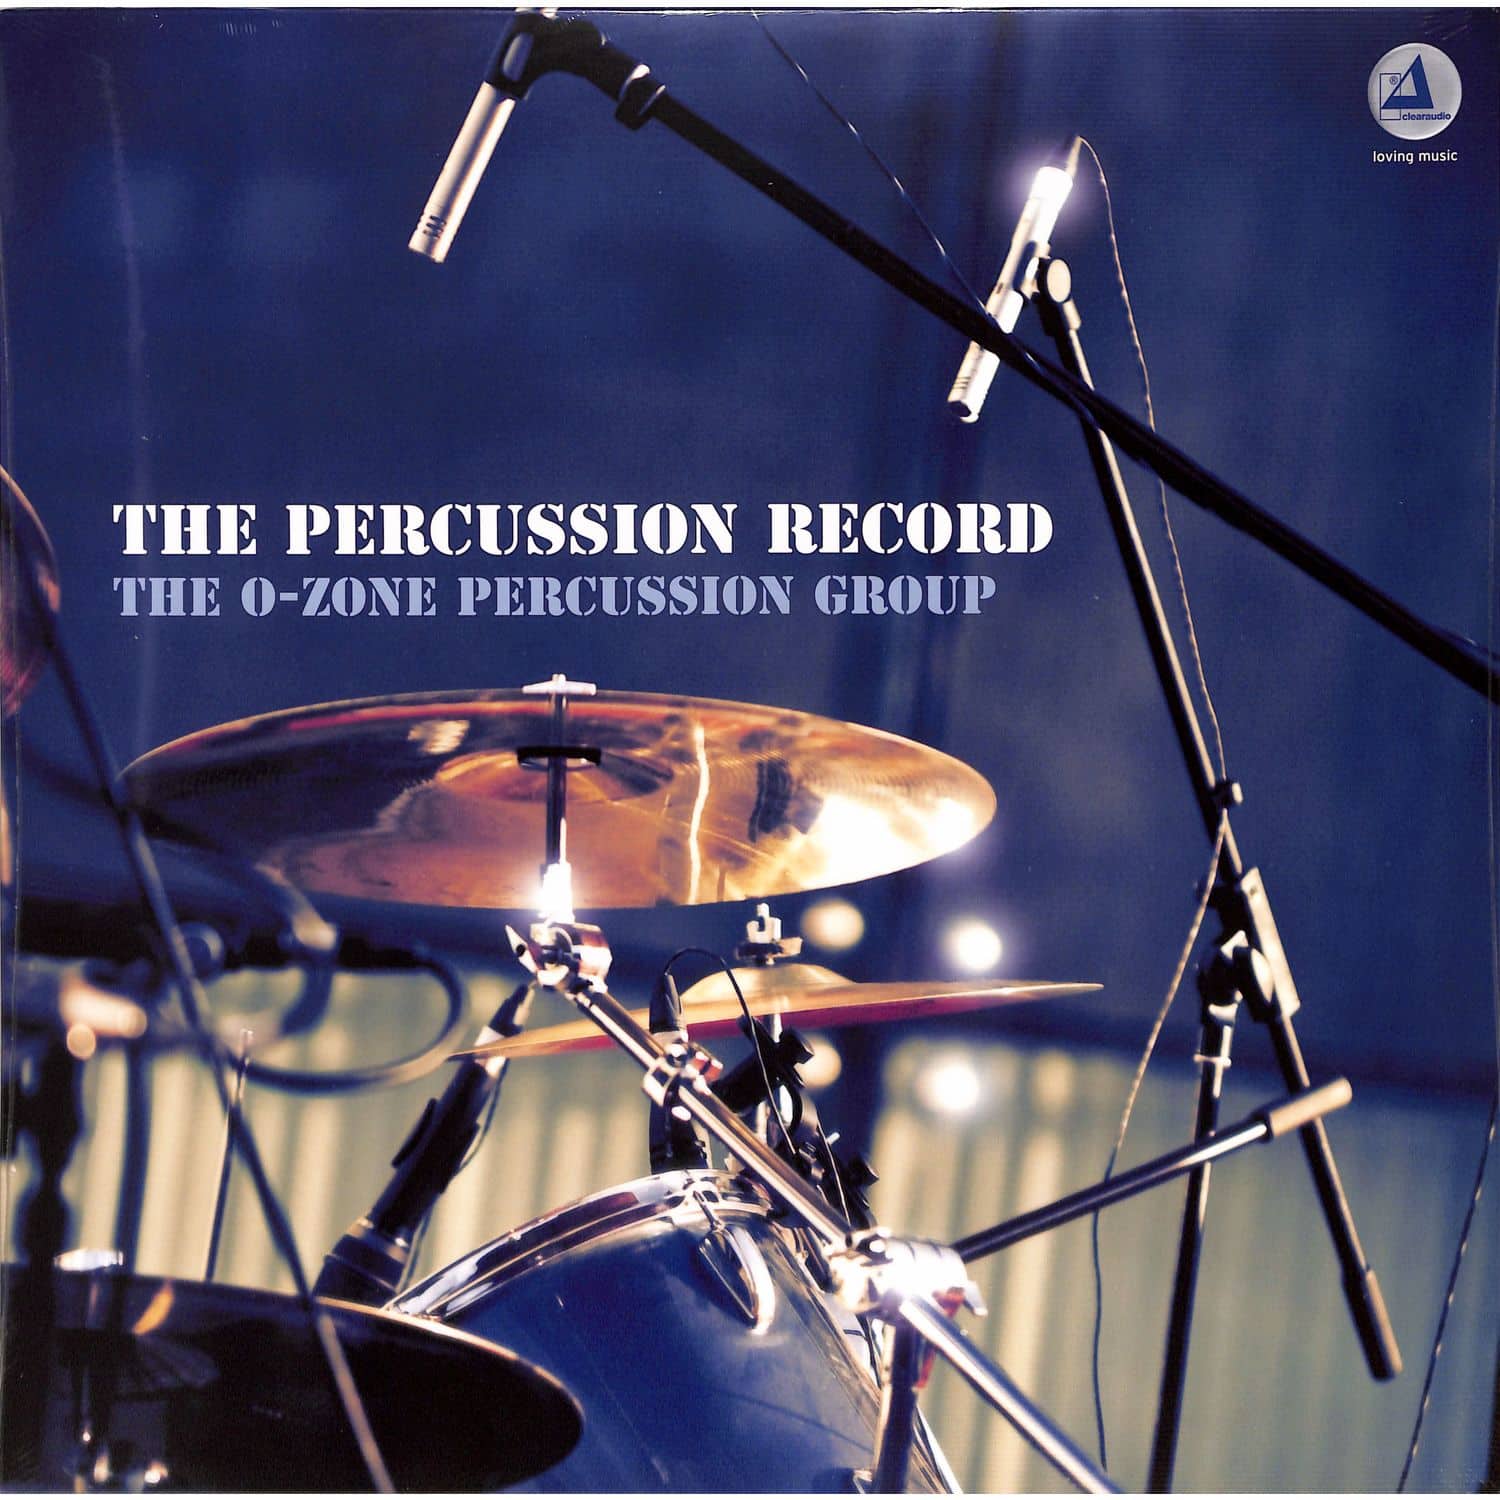 The O-Zone Percussion Group - THE PERCUSSION RECORD 